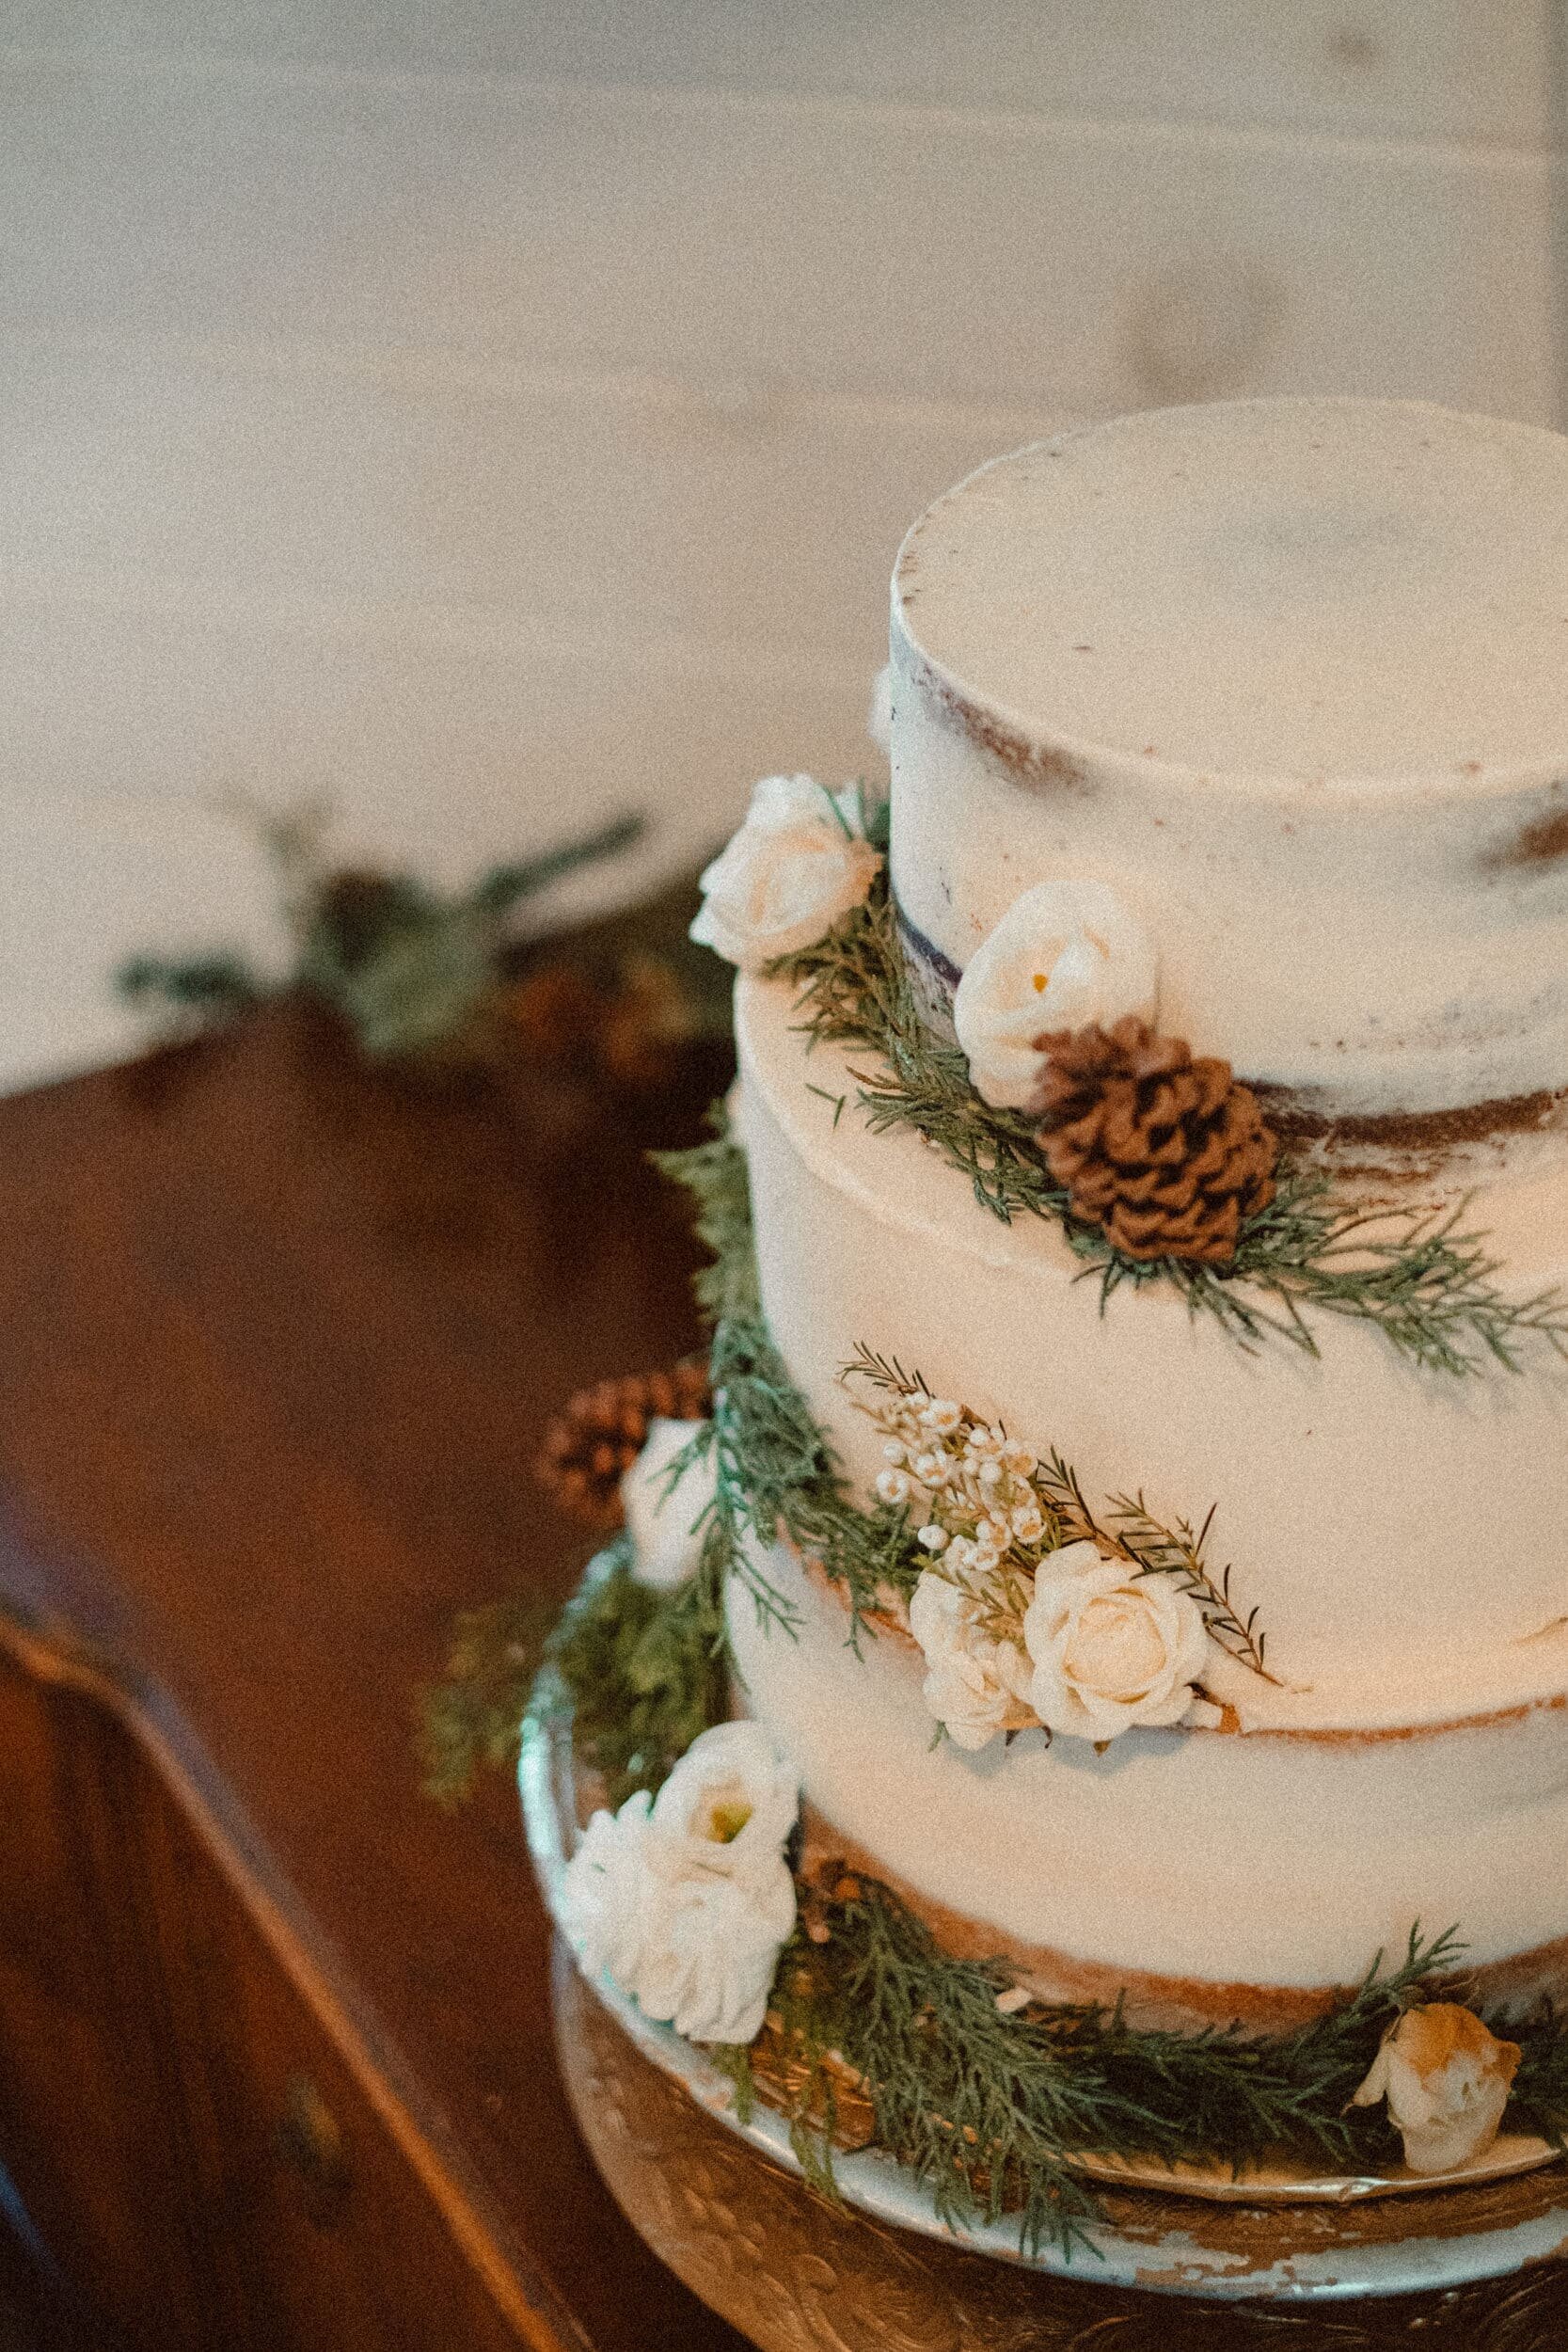 White wedding cake ideas for simplicity